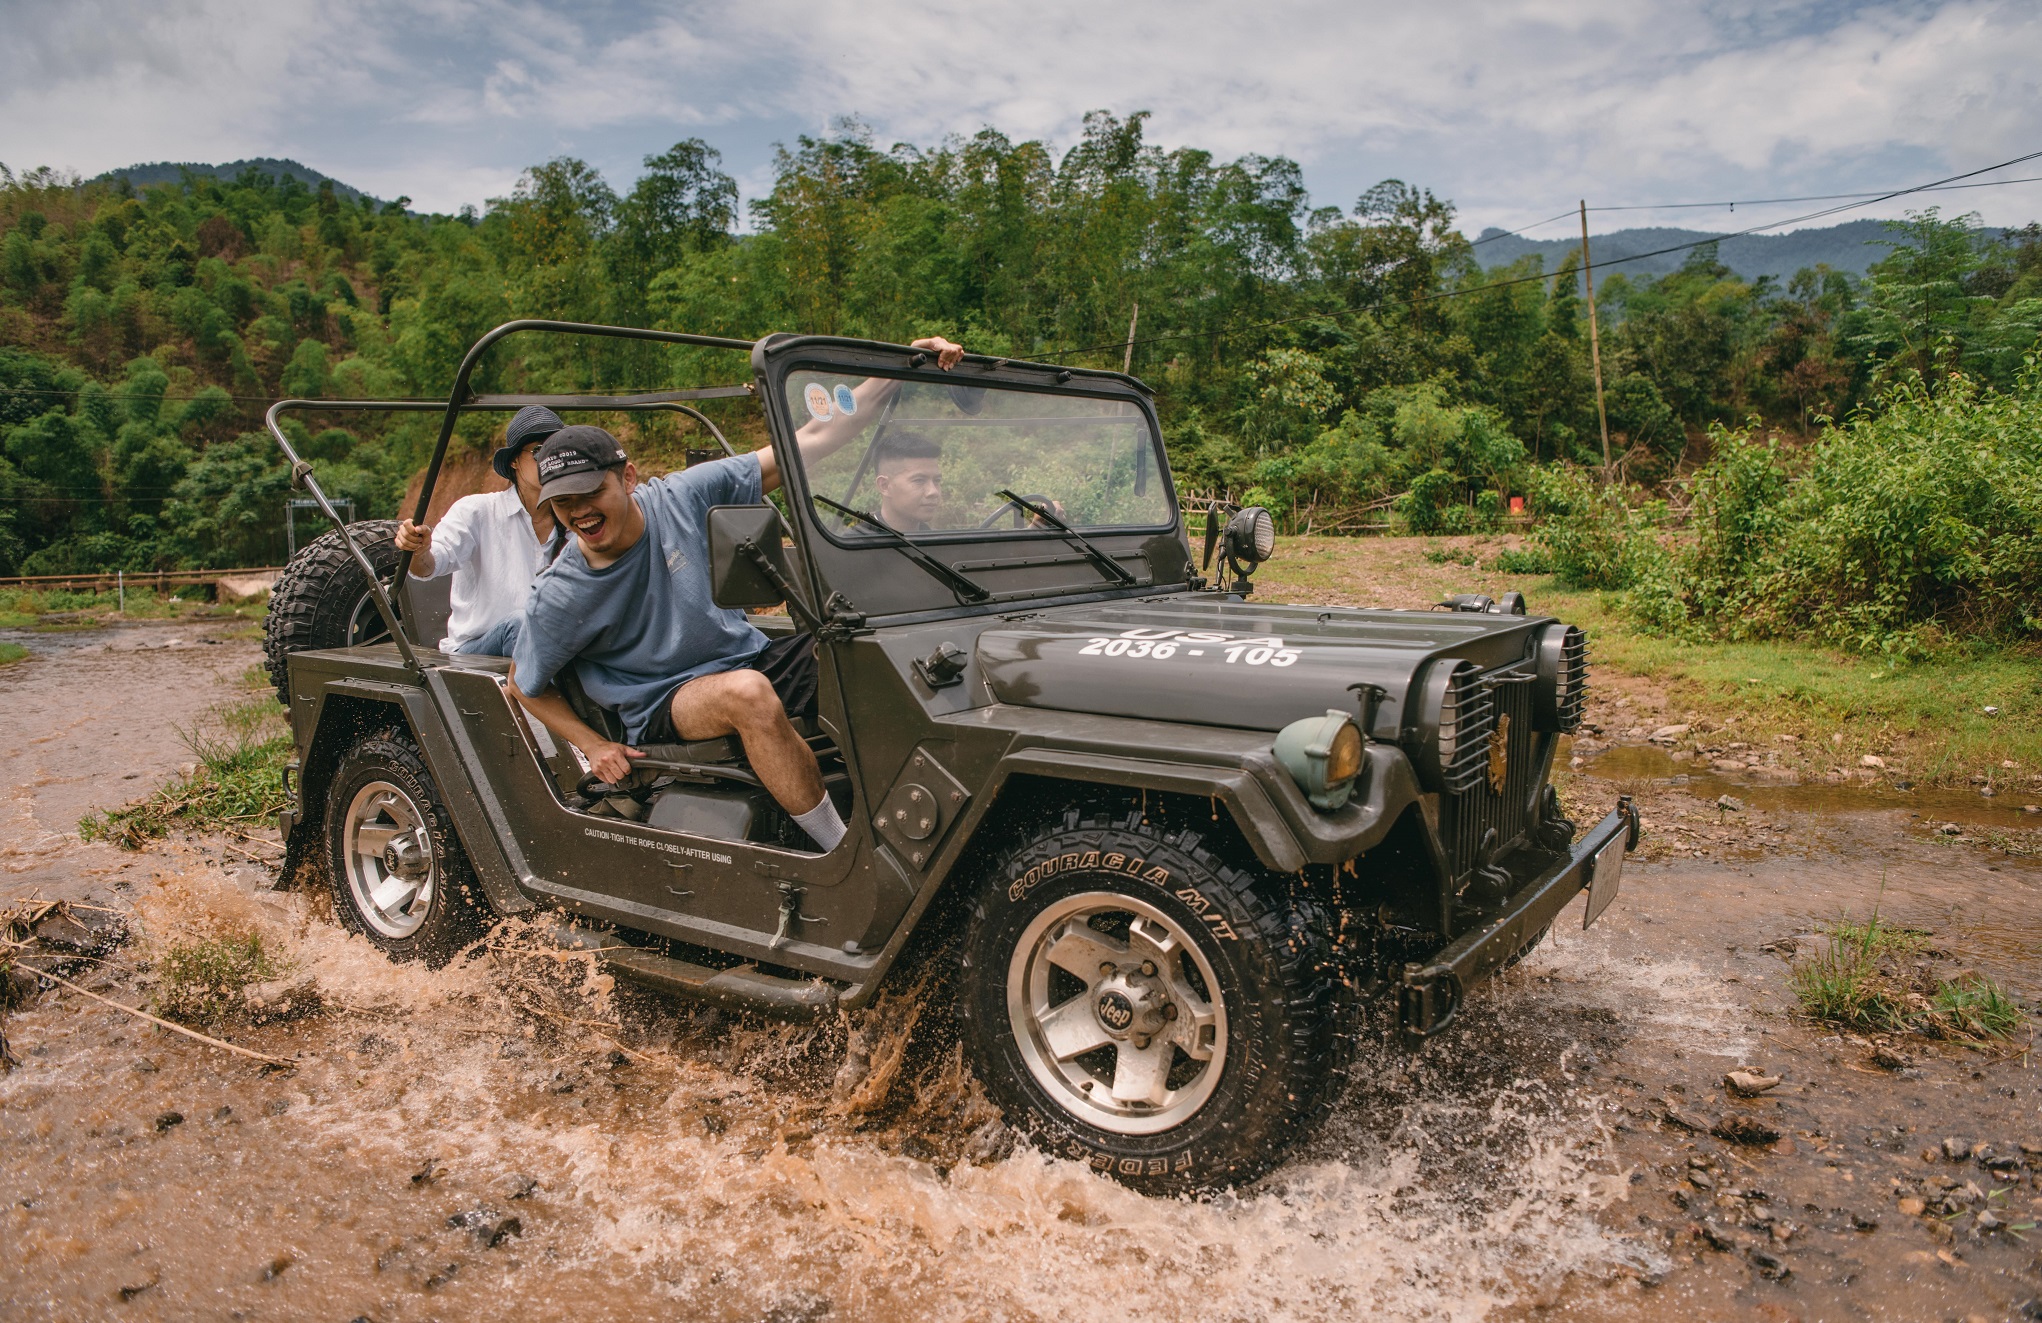 Avana Jeep Tour - The Ride of Joy